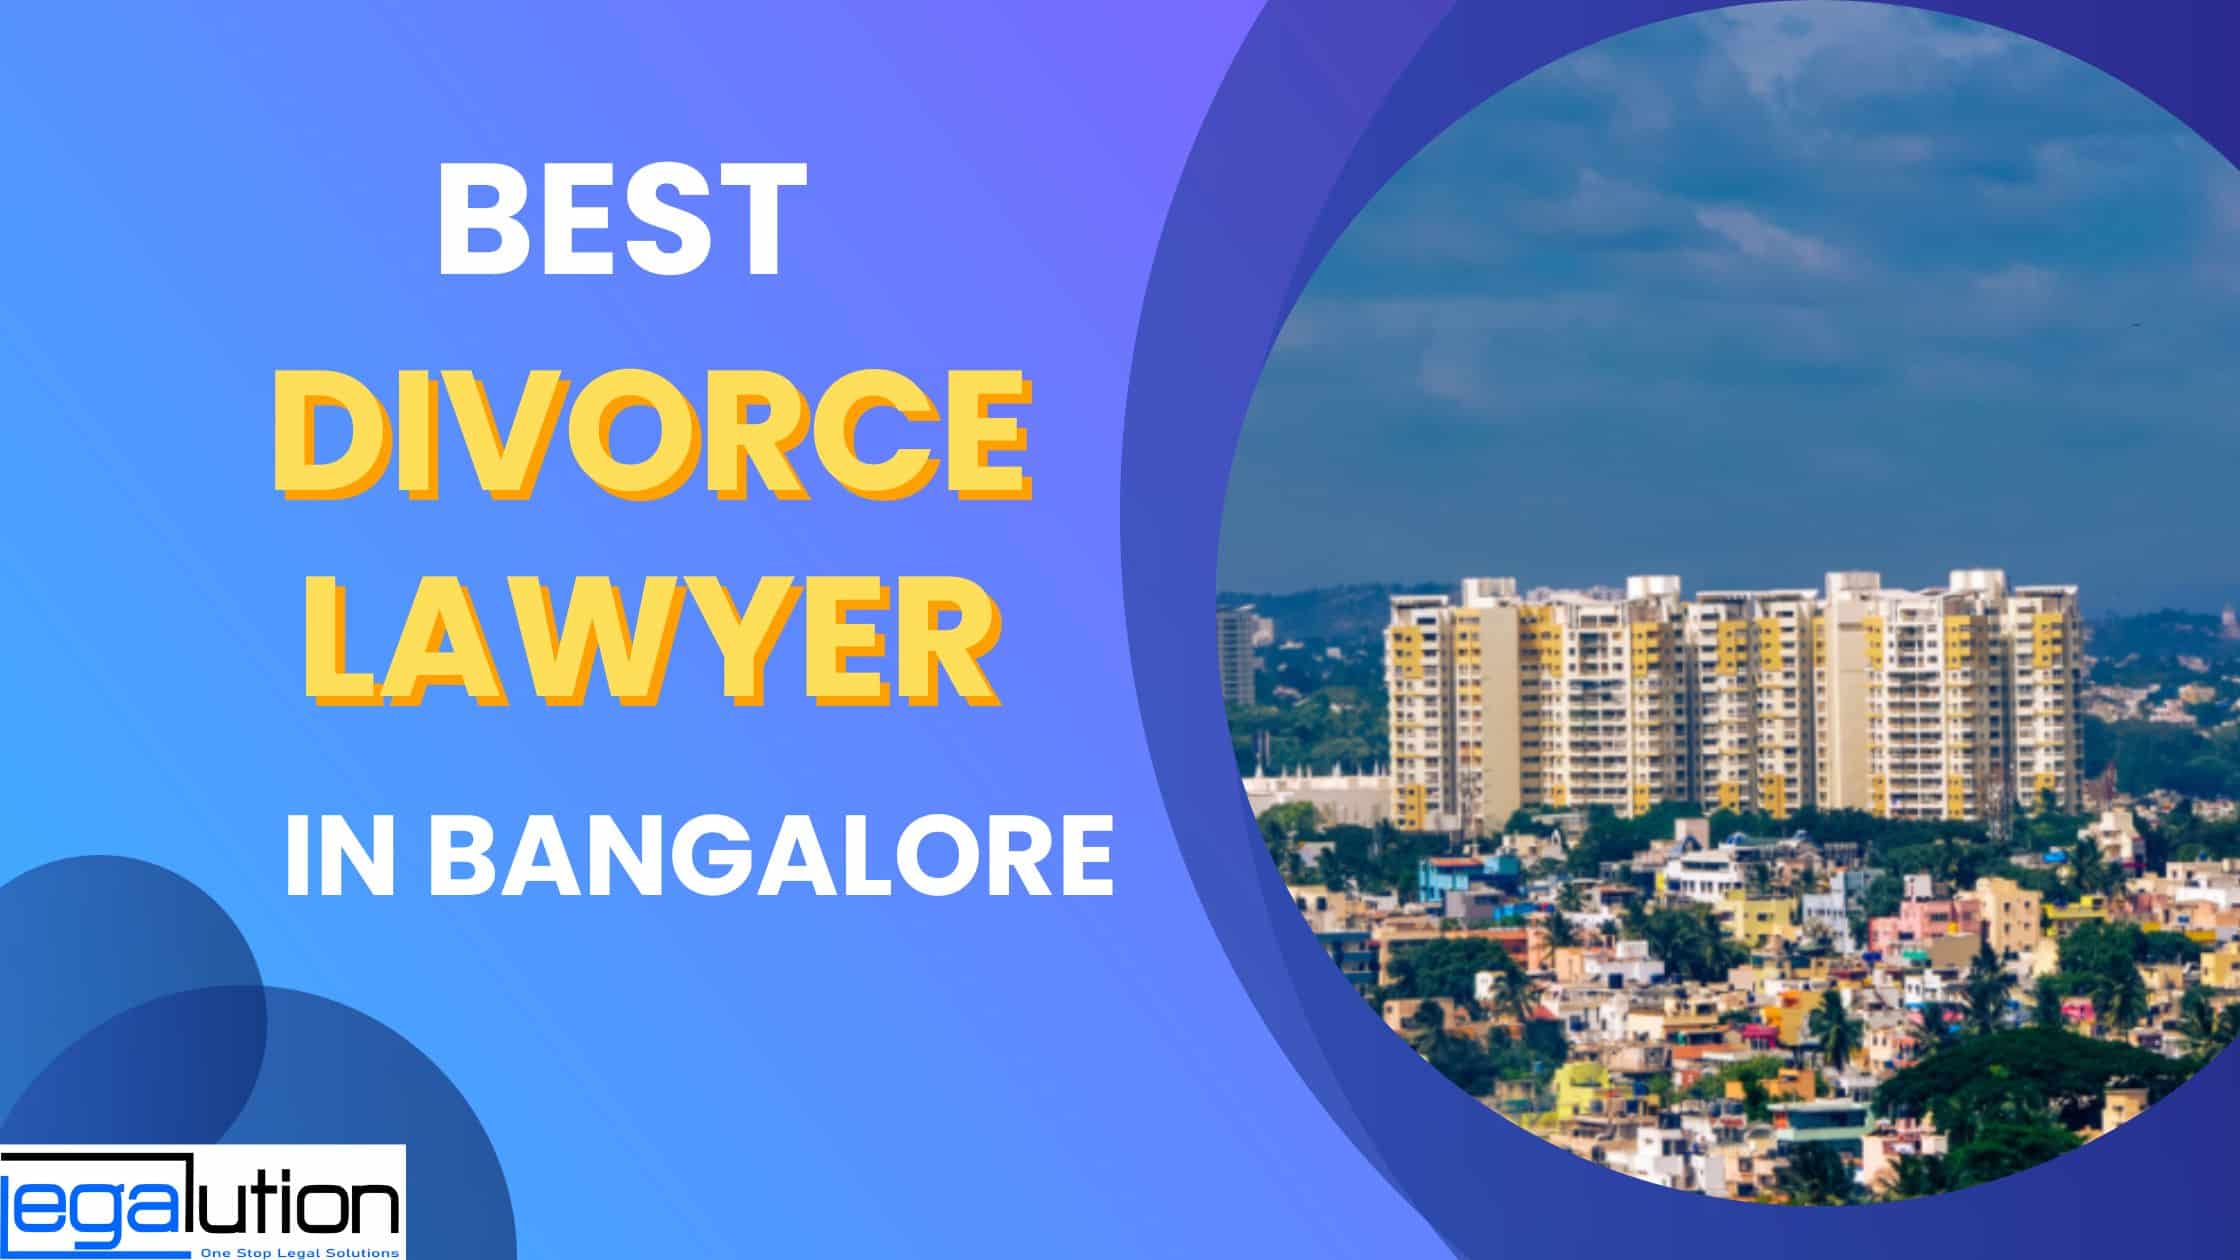 Best Divorce Lawyer in Bangalore